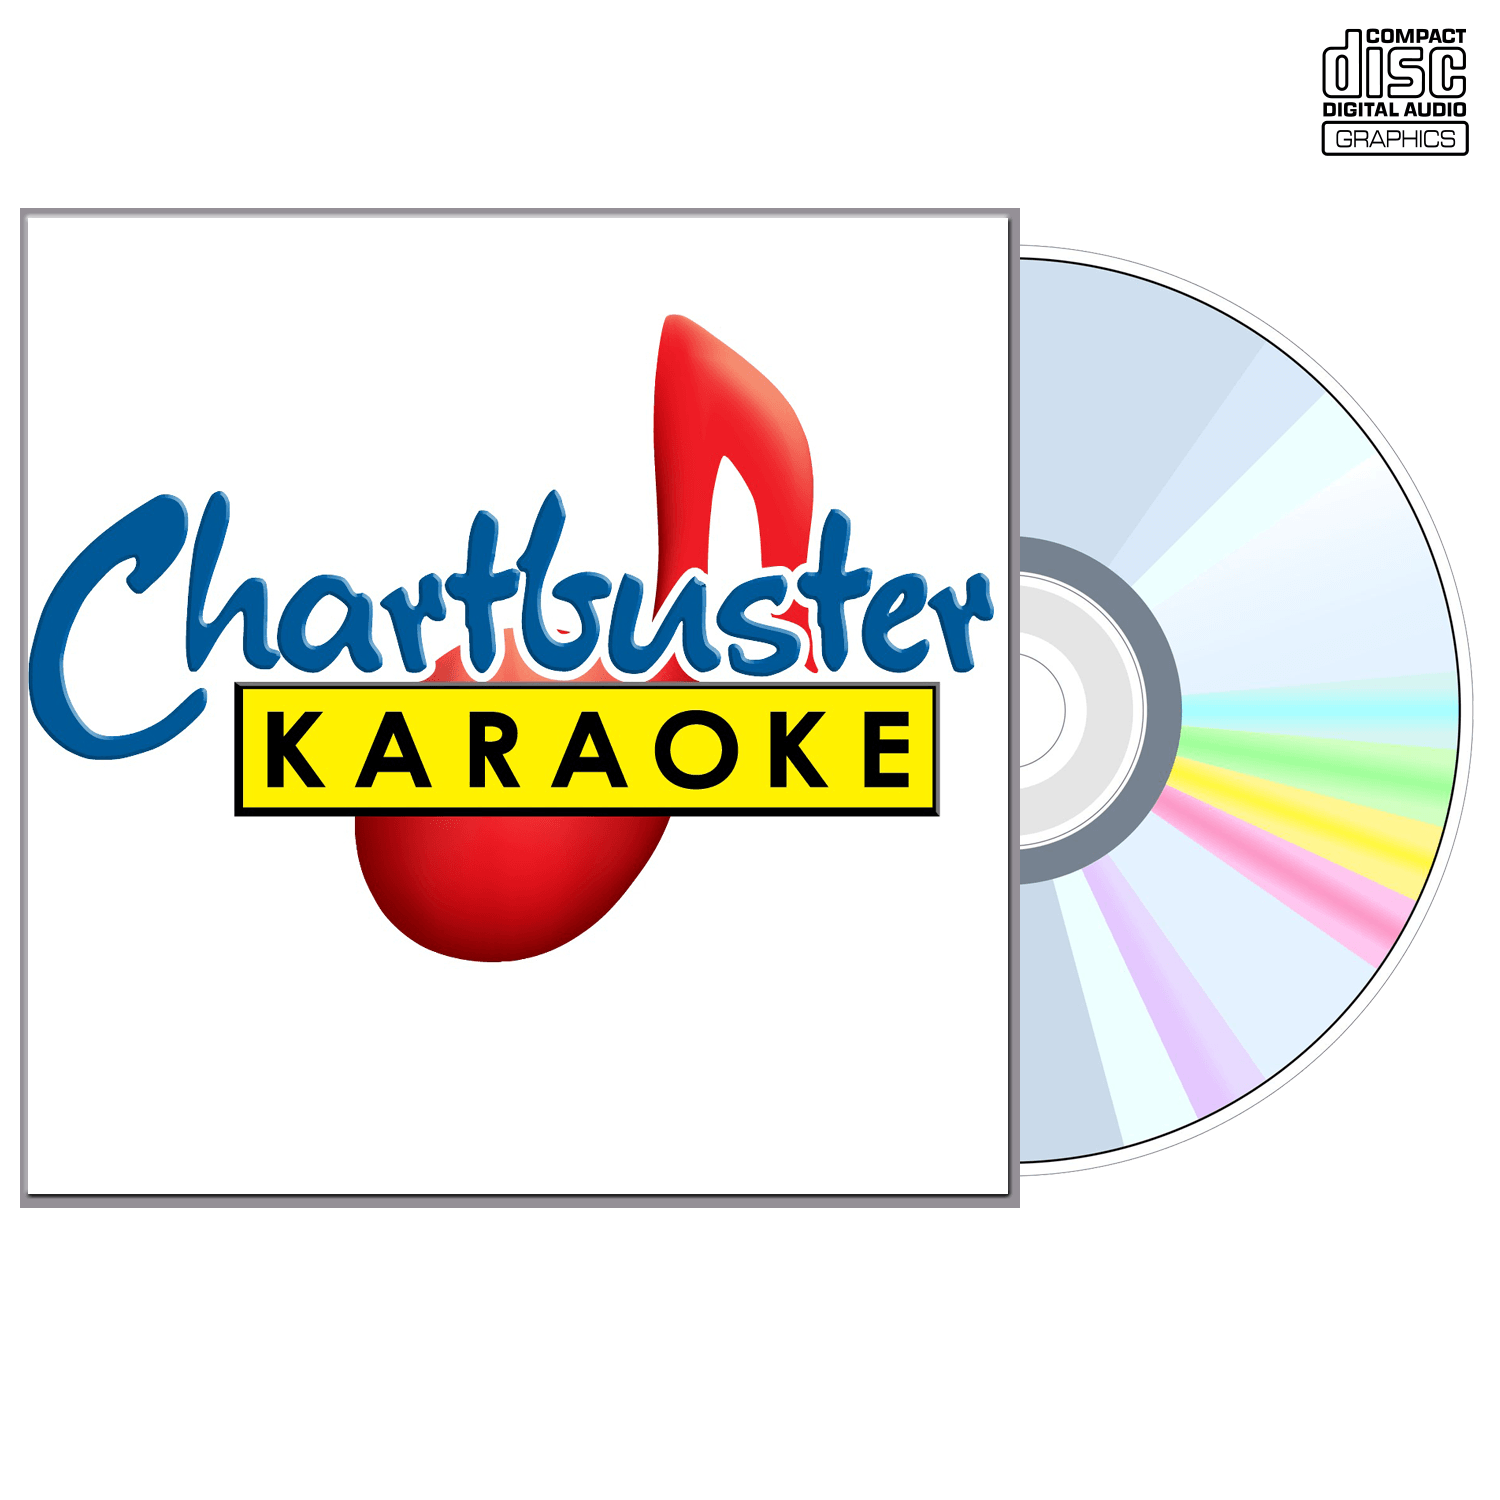 Best Of Carrie Underwood - CD+G - Chartbuster Karaoke - Karaoke Home Entertainment